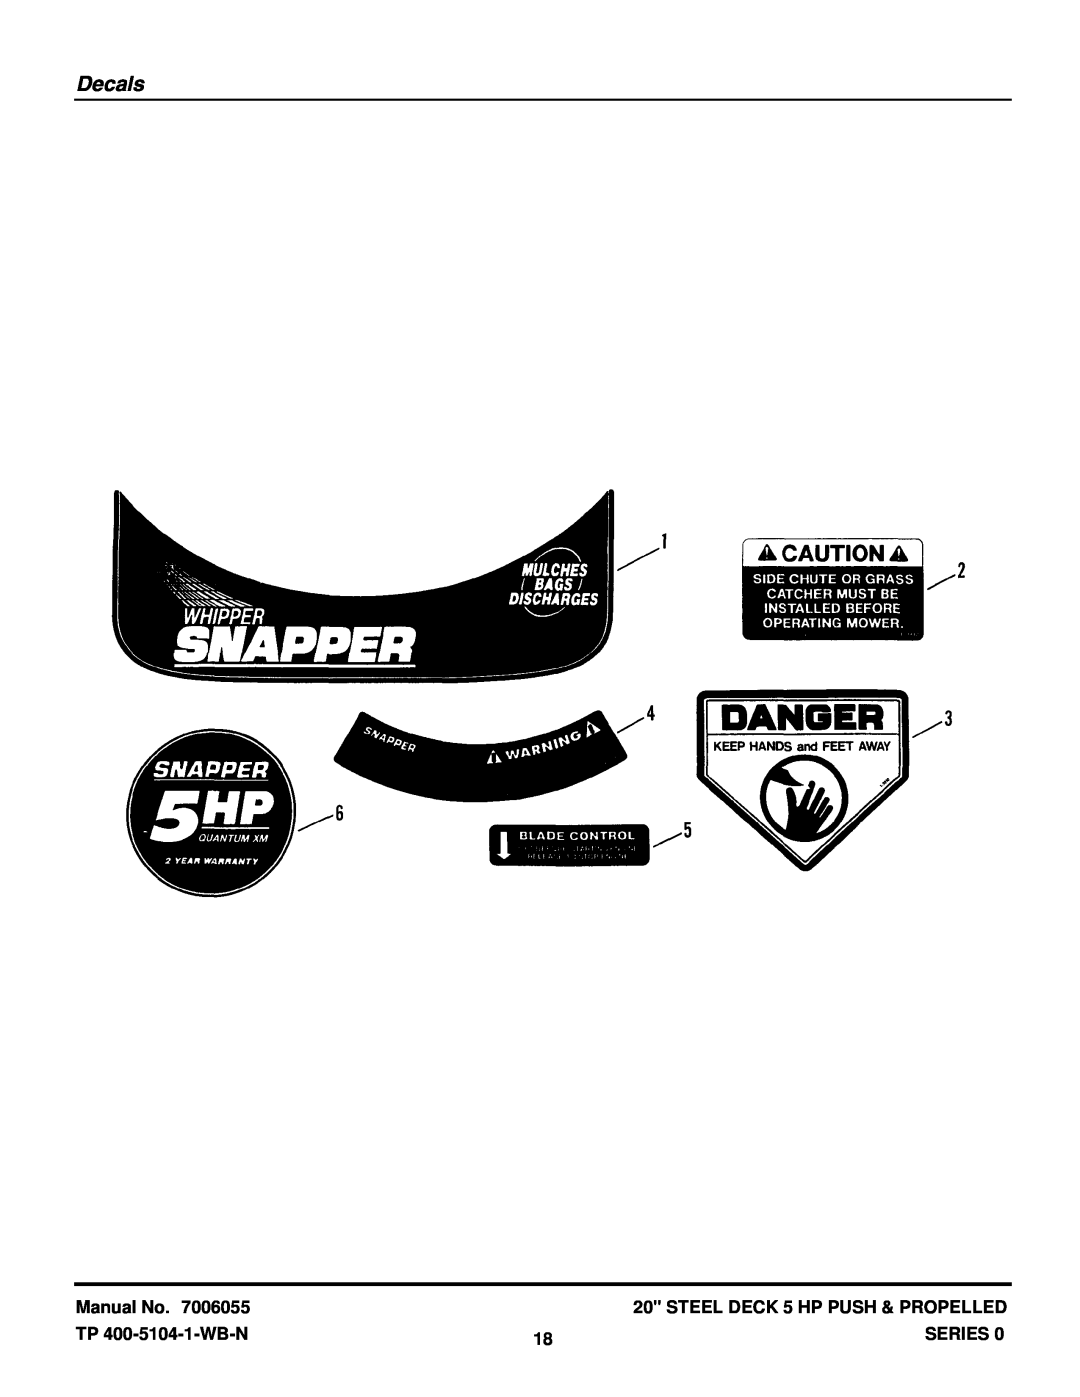 Snapper NR20500, NRP20500 manual Decals, Manual No, STEEL DECK 5 HP PUSH & PROPELLED, TP 400-5104-1-WB-N, Series 